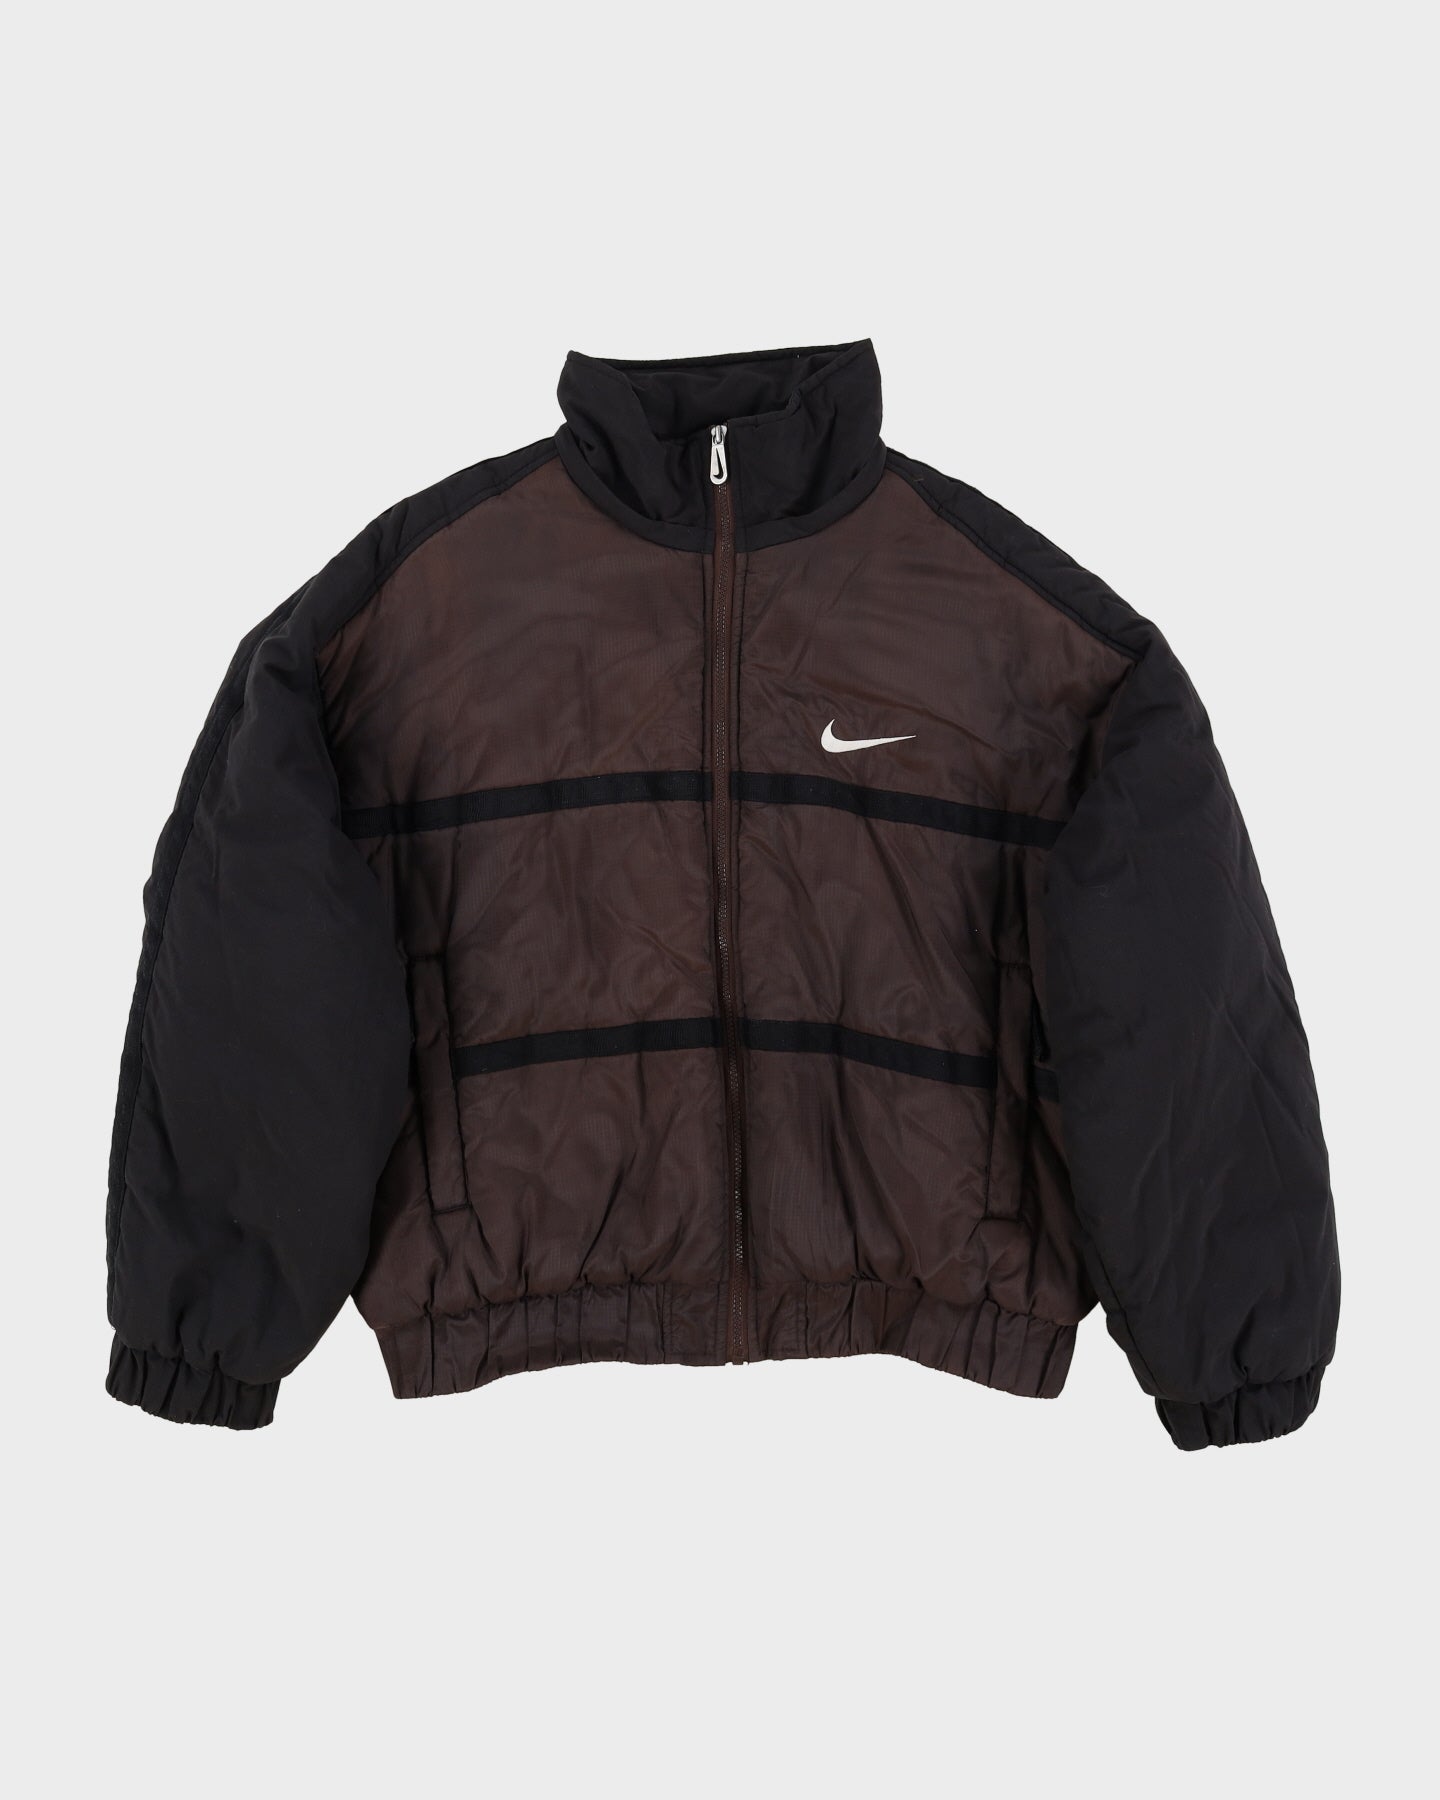 2000s Nike Brown / Black Puffer Jacket - L